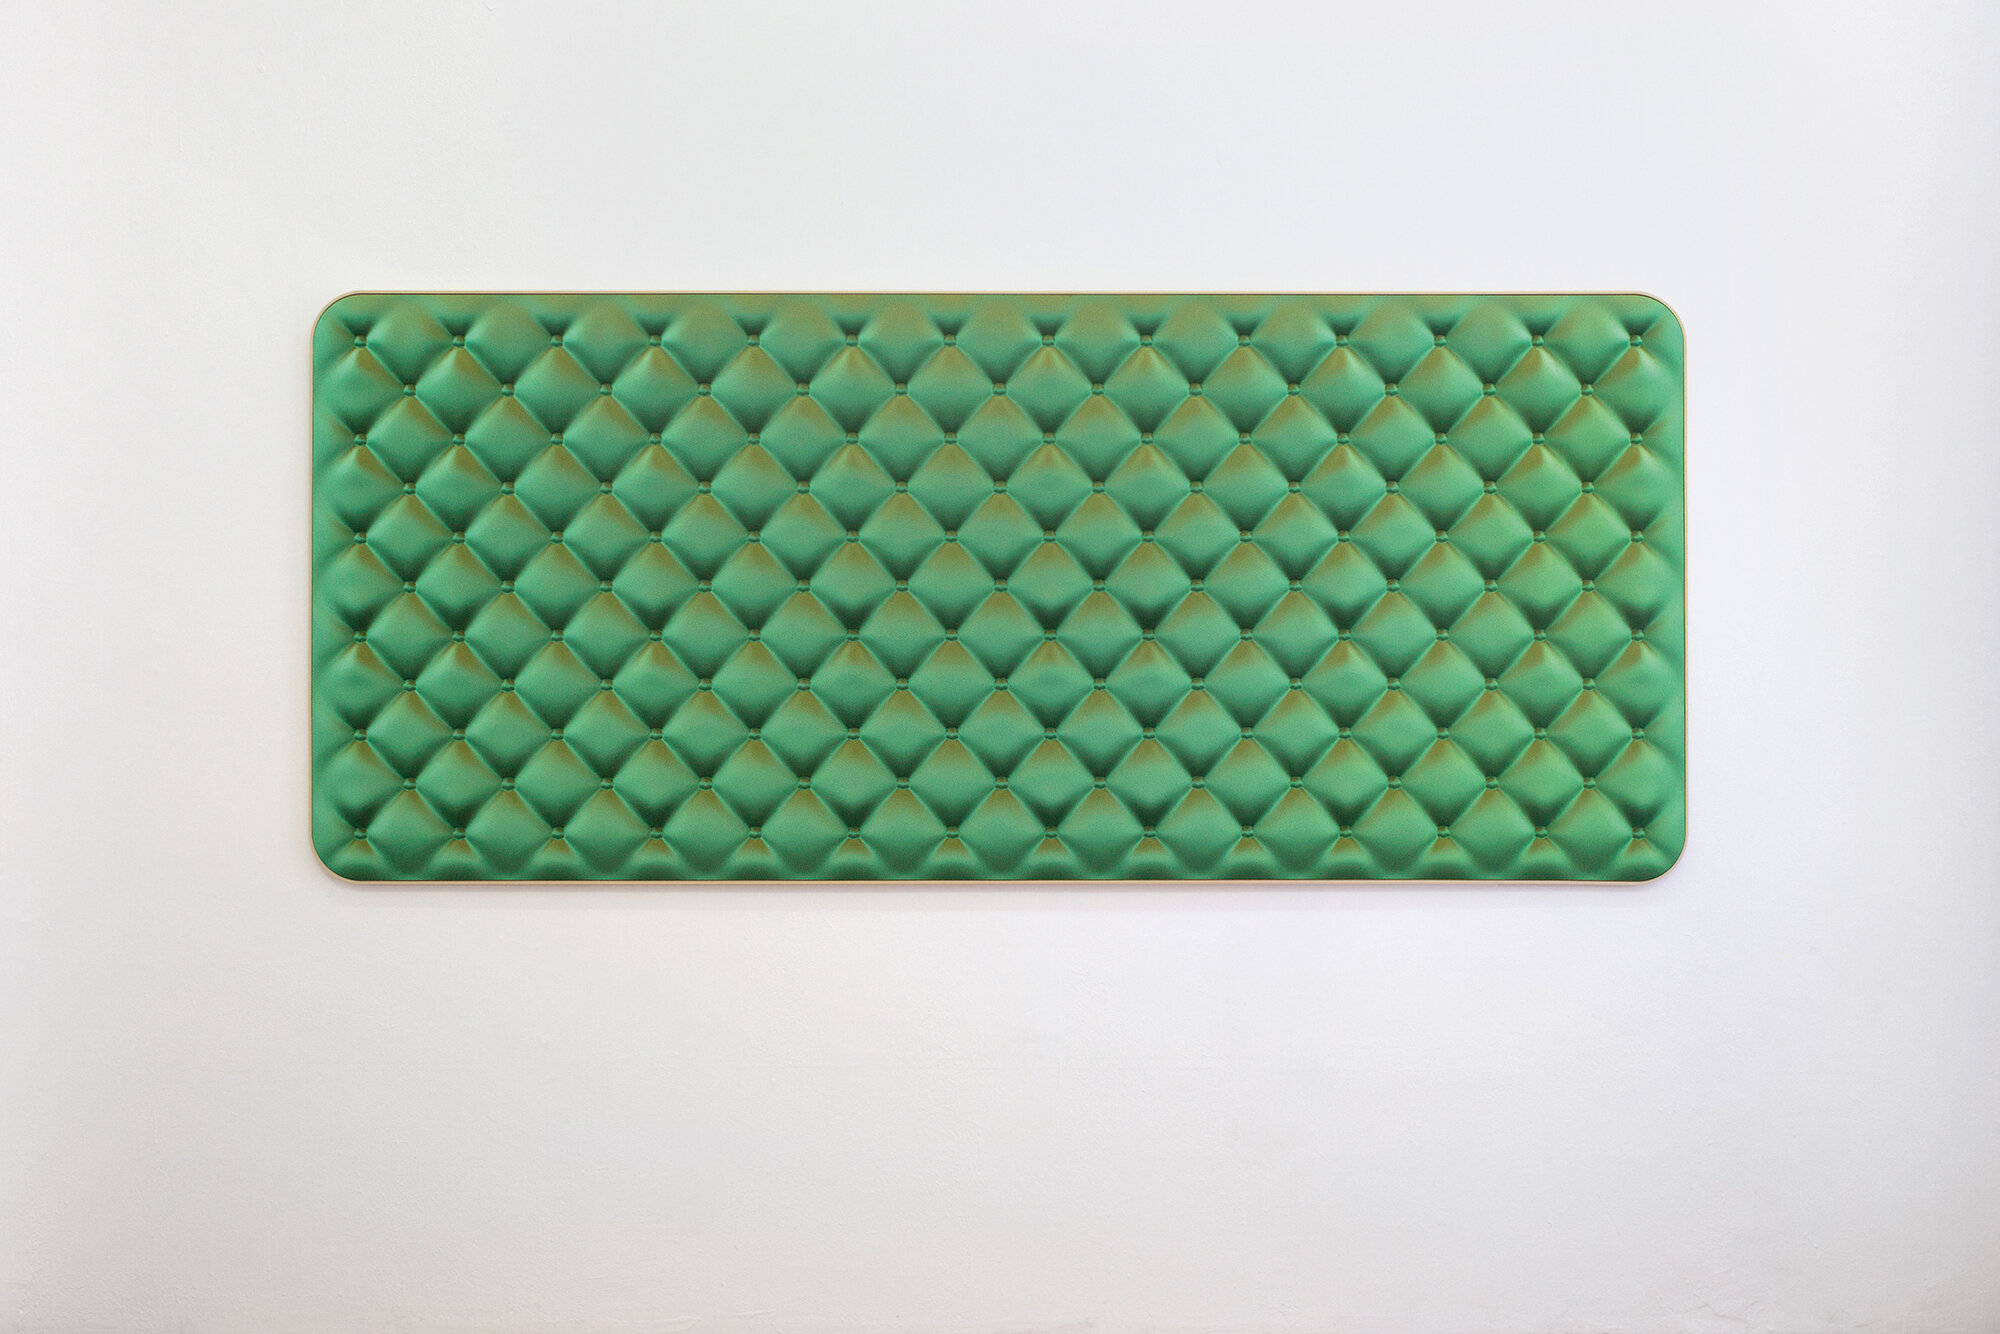   Soft Green   2016, digital sculpture, inkjet printed on paper in artist’s frame (painted MDF), 110 × 260 cm 